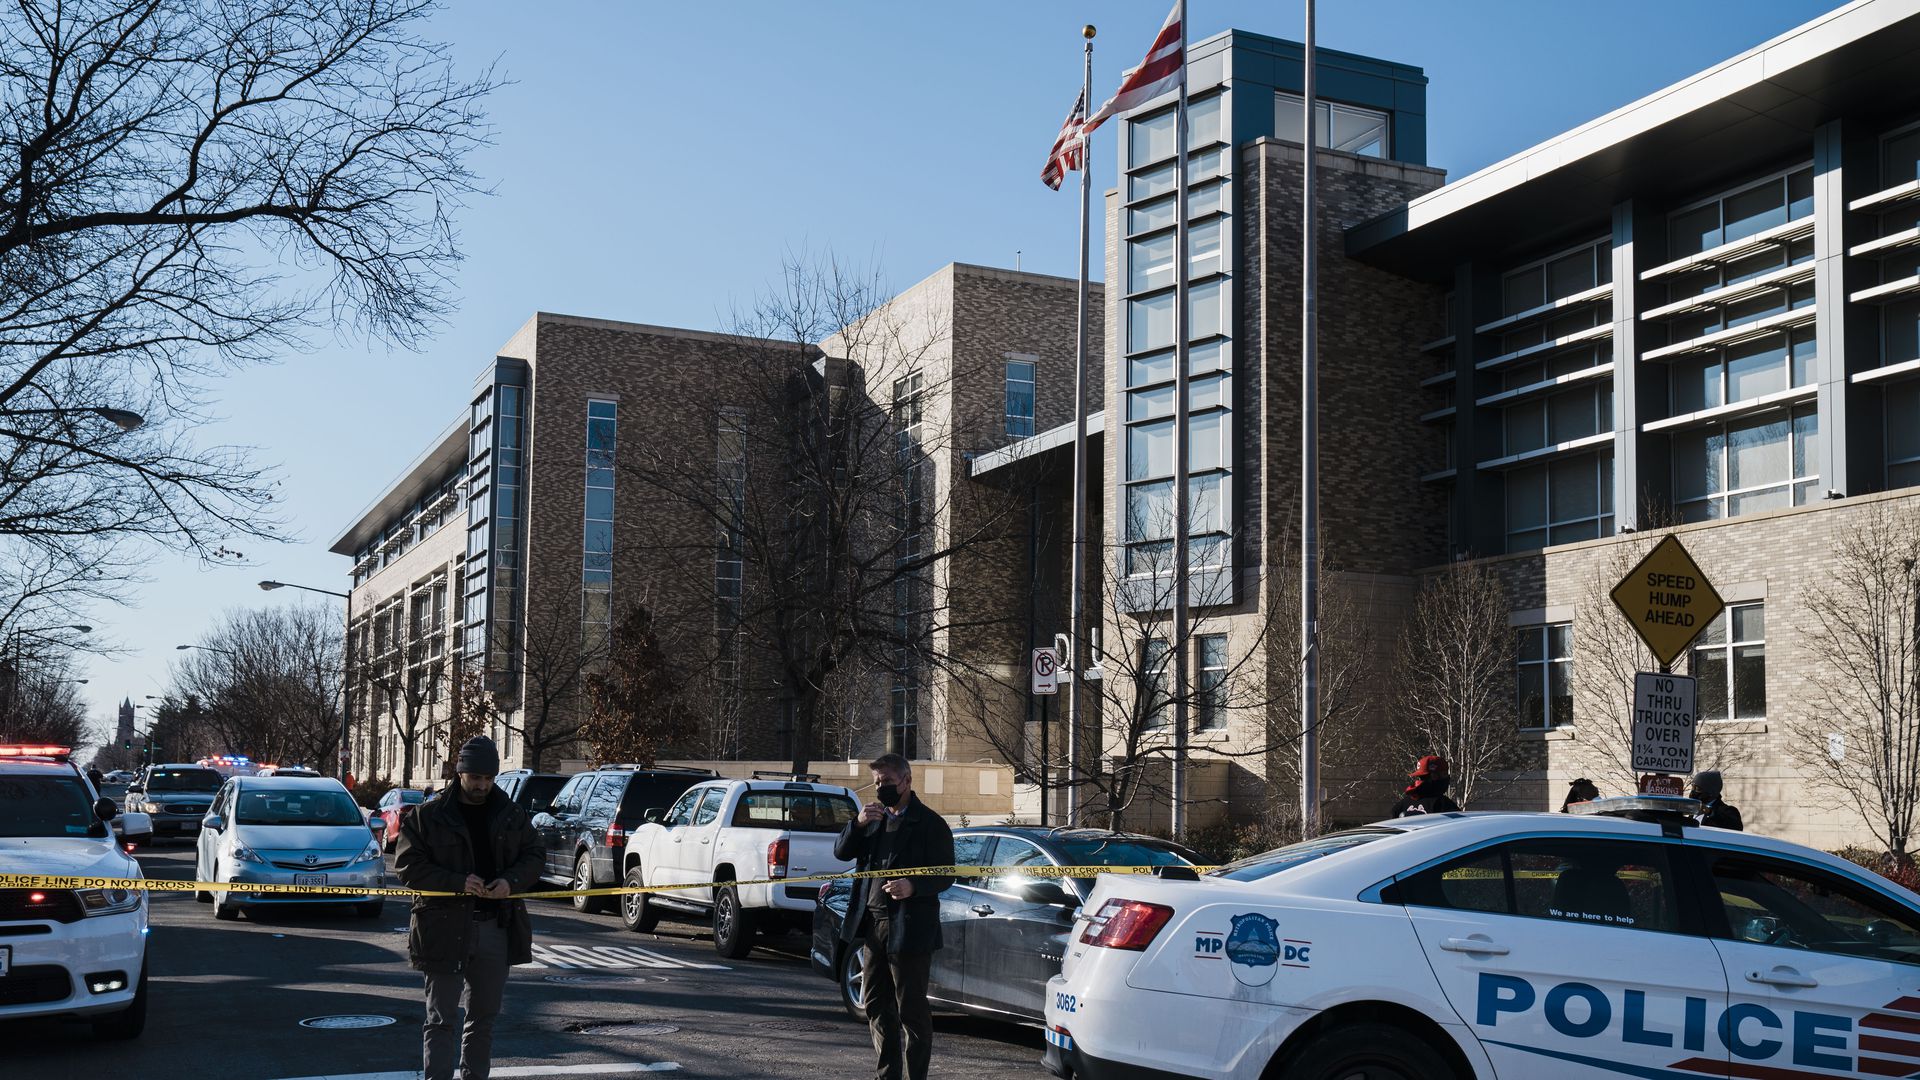 Police probe bomb threats to 8 schools around Washington D.C.